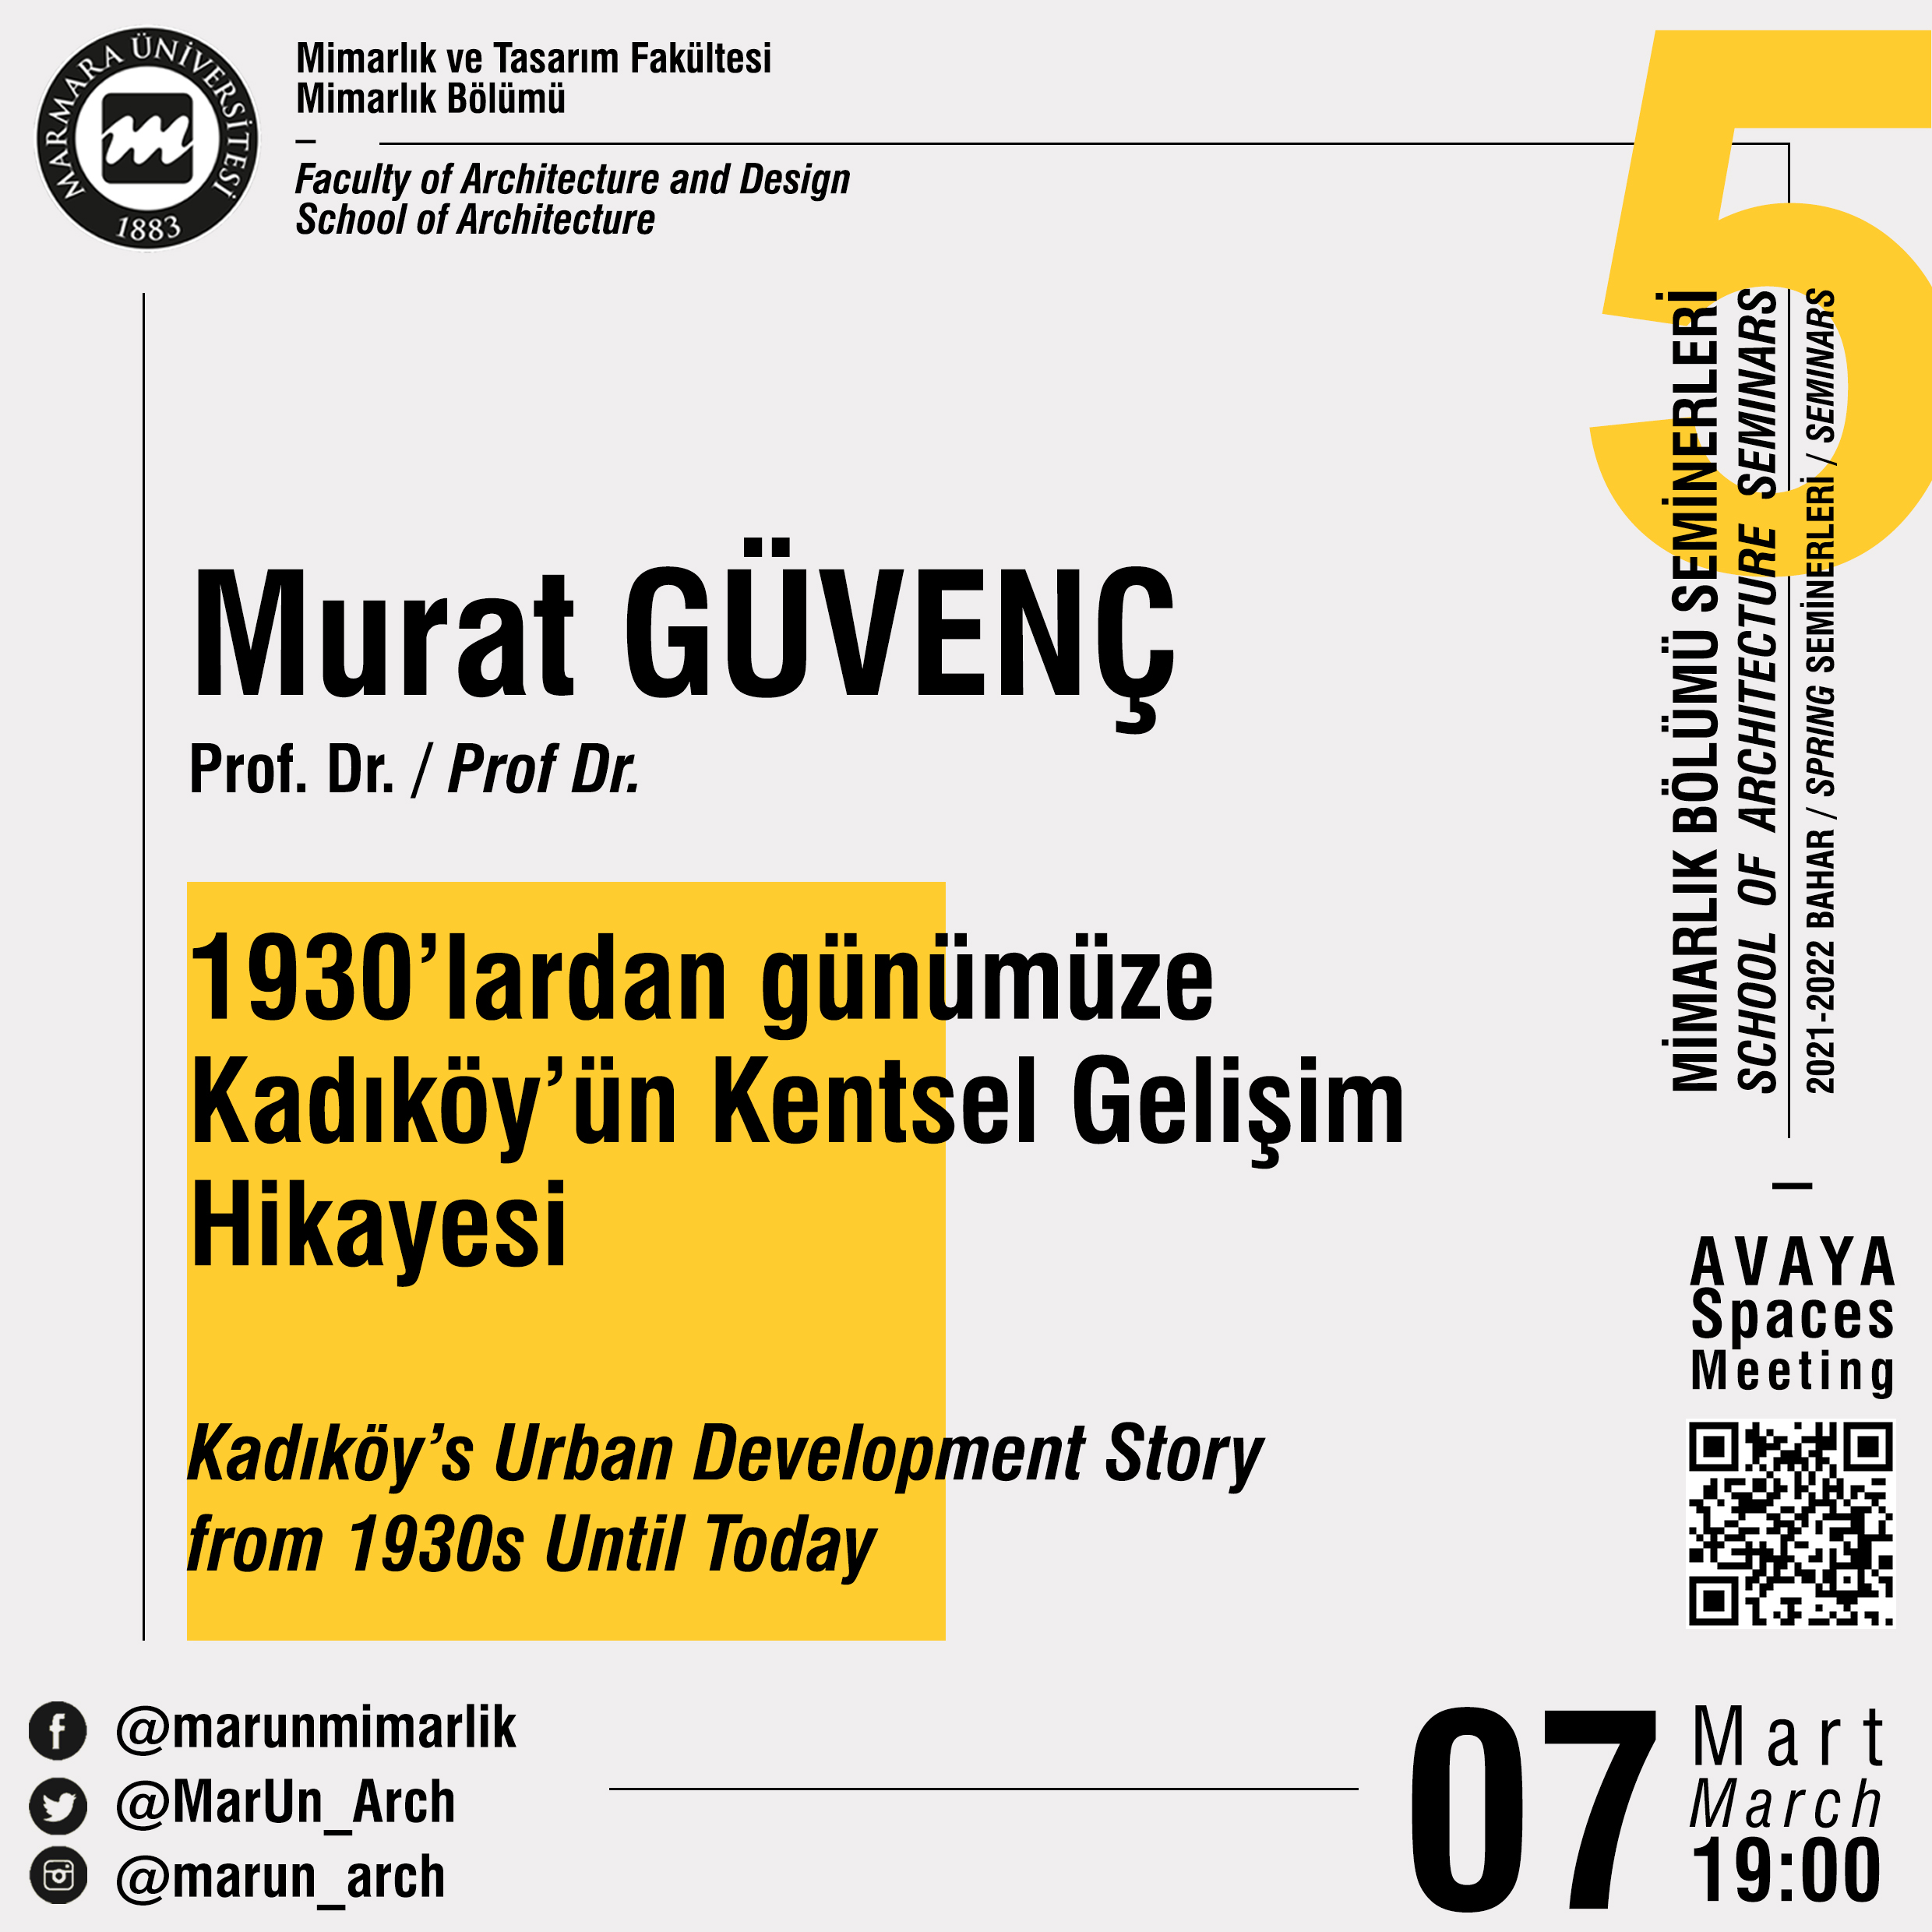 05_Murat Güvenç.jpg (1.33 MB)